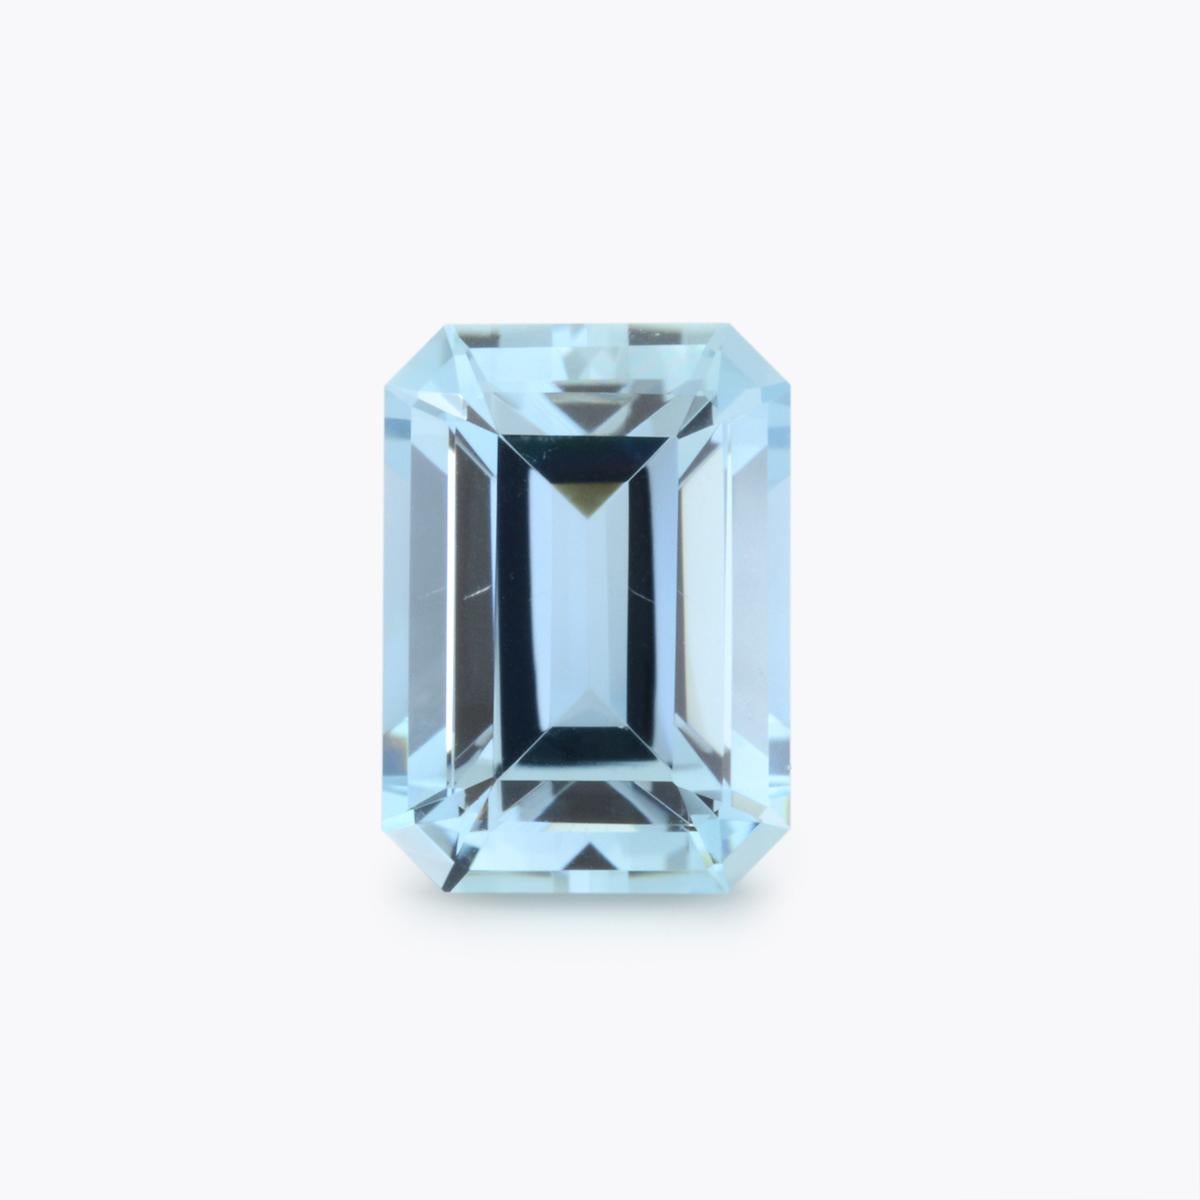 Contemporary Aquamarine Ring Loose Stone 1.85 Carat Unmounted Emerald Cut Gemstone For Sale